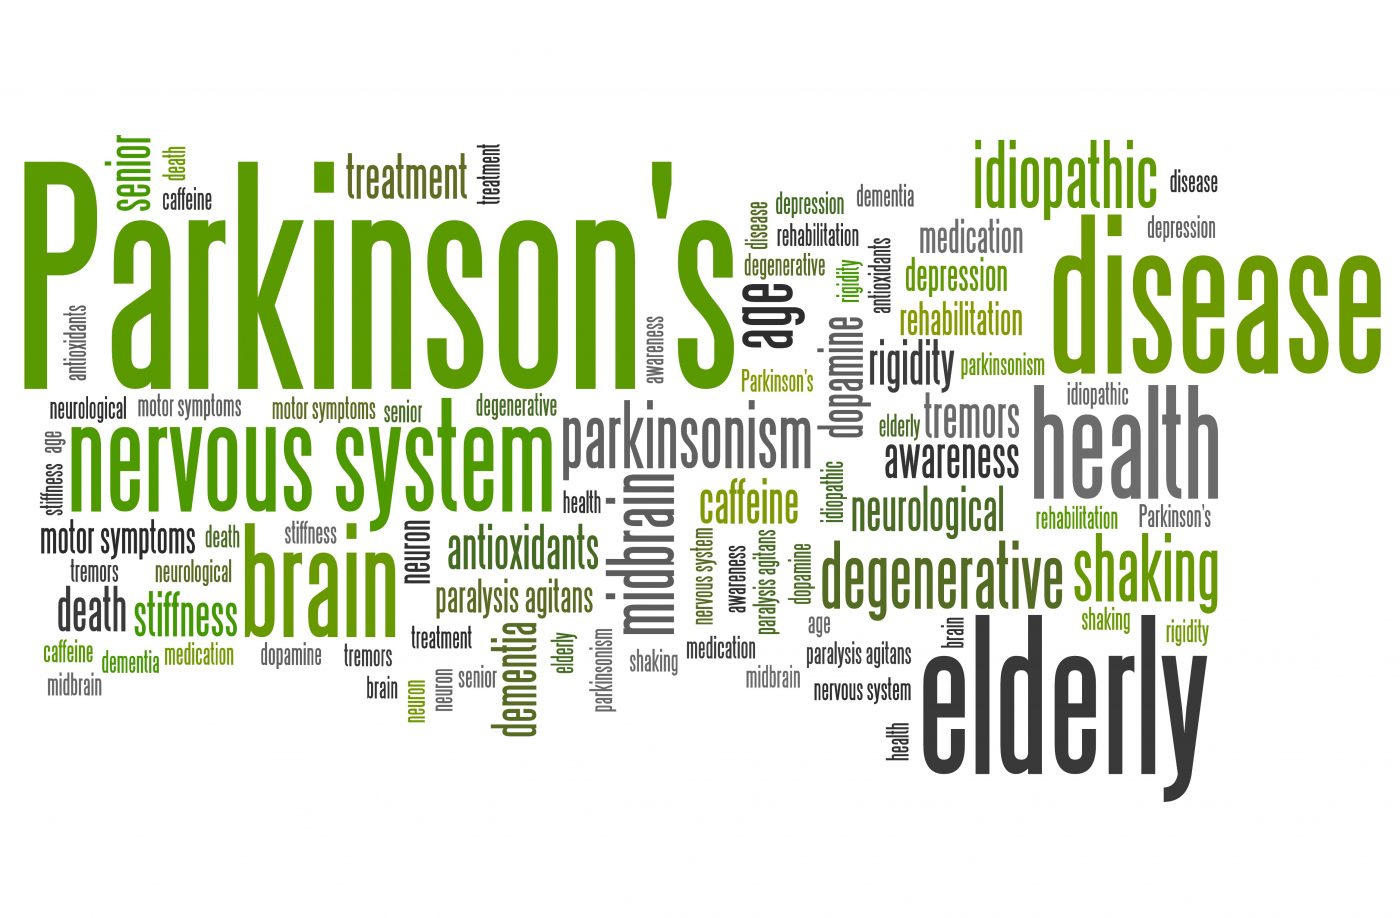 30 Days of Parkinson's